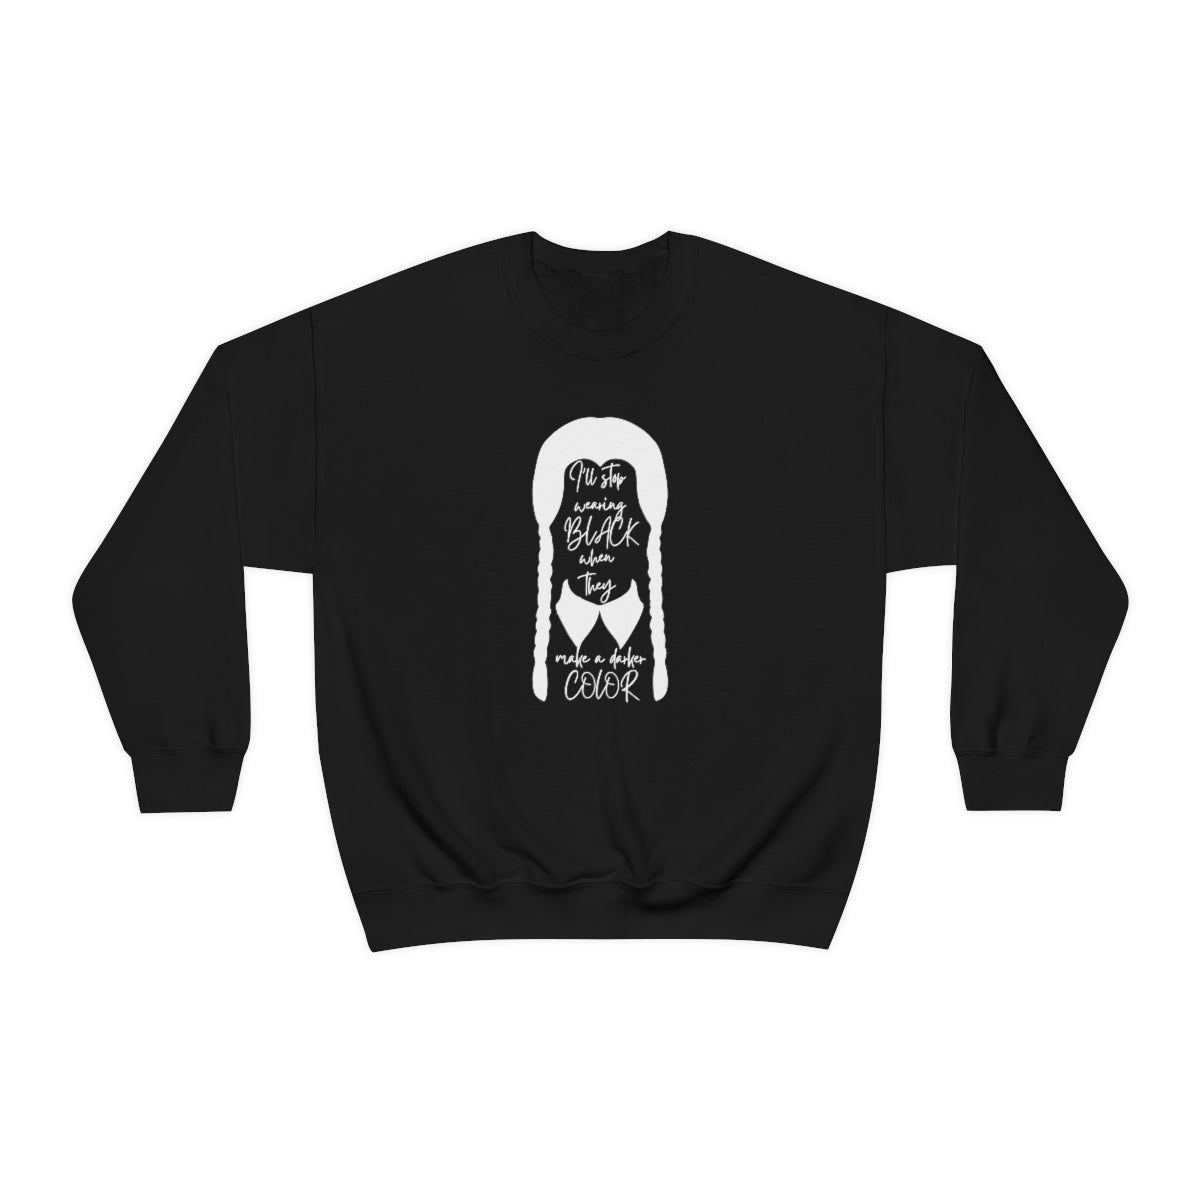 Wednesday Addams Crewneck Sweatshirt I'll Stop Wearing Black When They Make A Darker Color